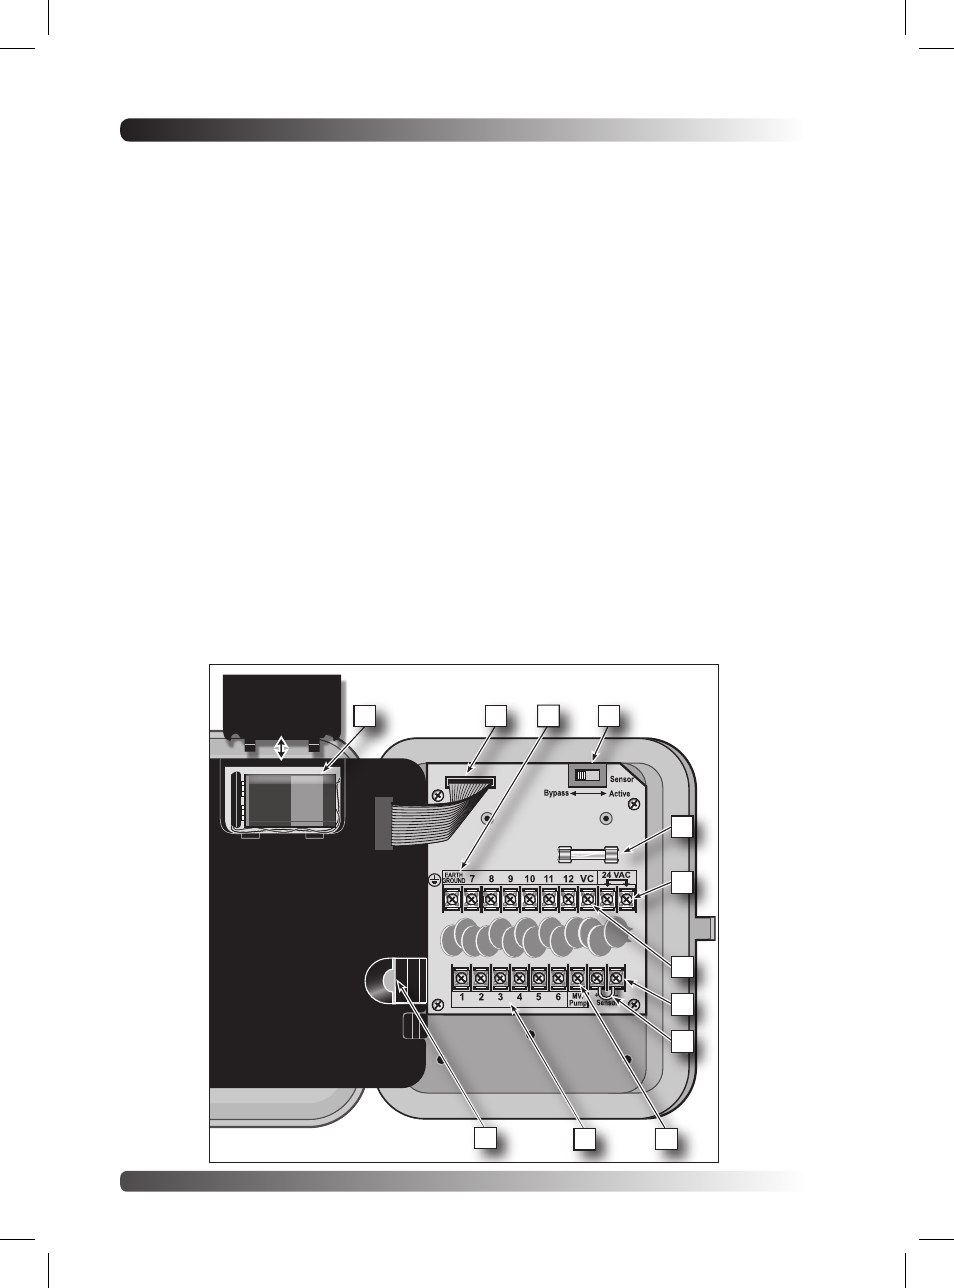 Internal controller components | Irritrol Rain Dial R User Manual